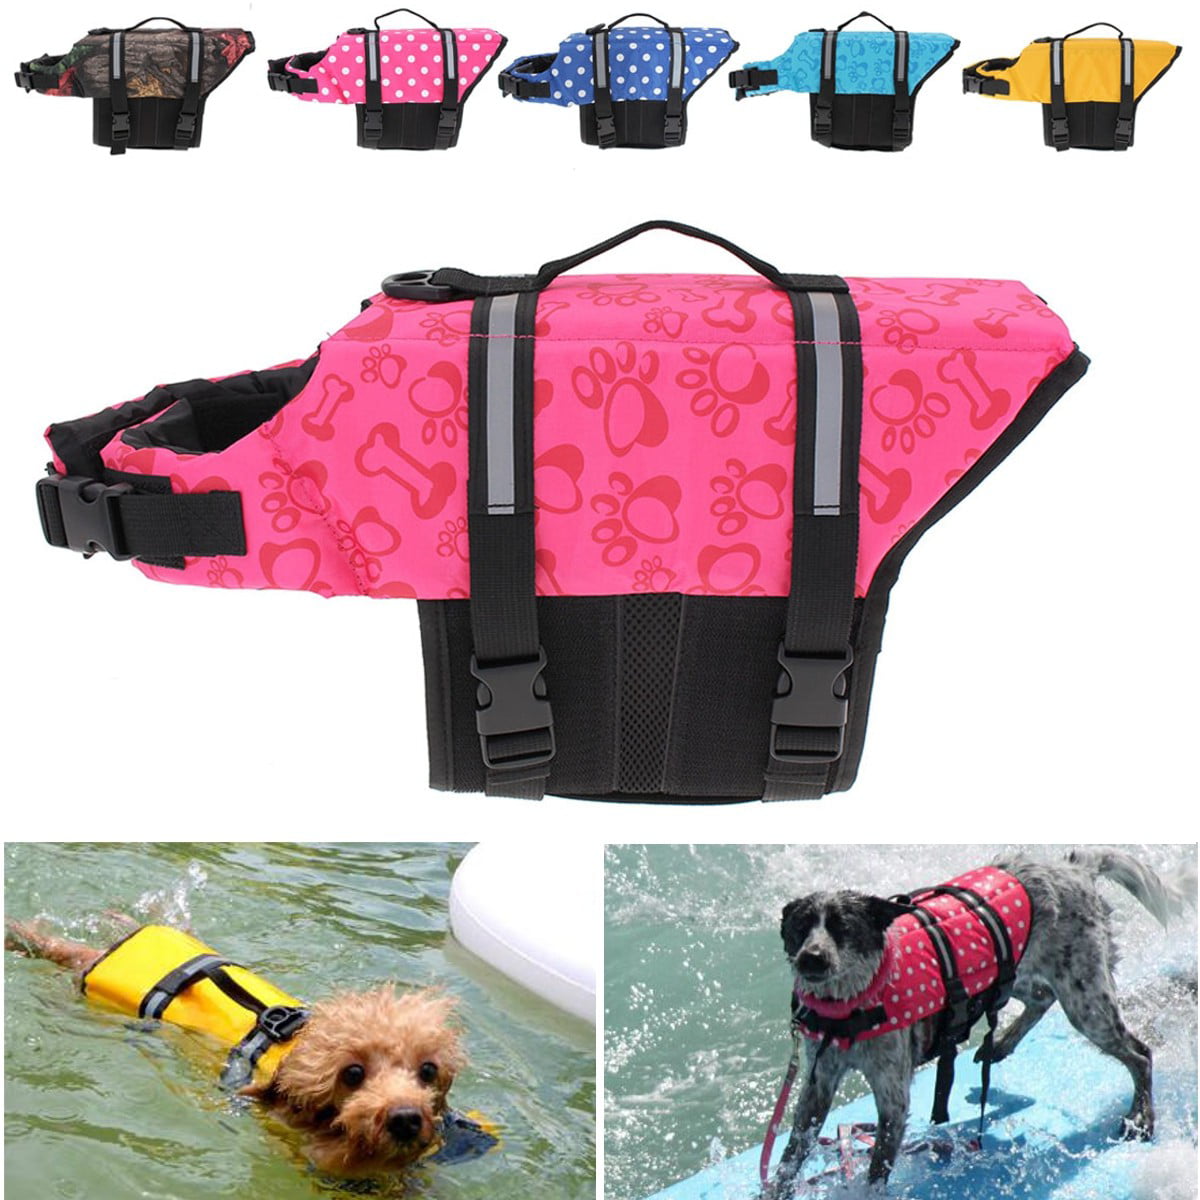 Dog Life Jacket Canine Pet Life Preserver Vest with Reflective Stripes/Padded Handle for Dogs Dog Swimming Floatation Device